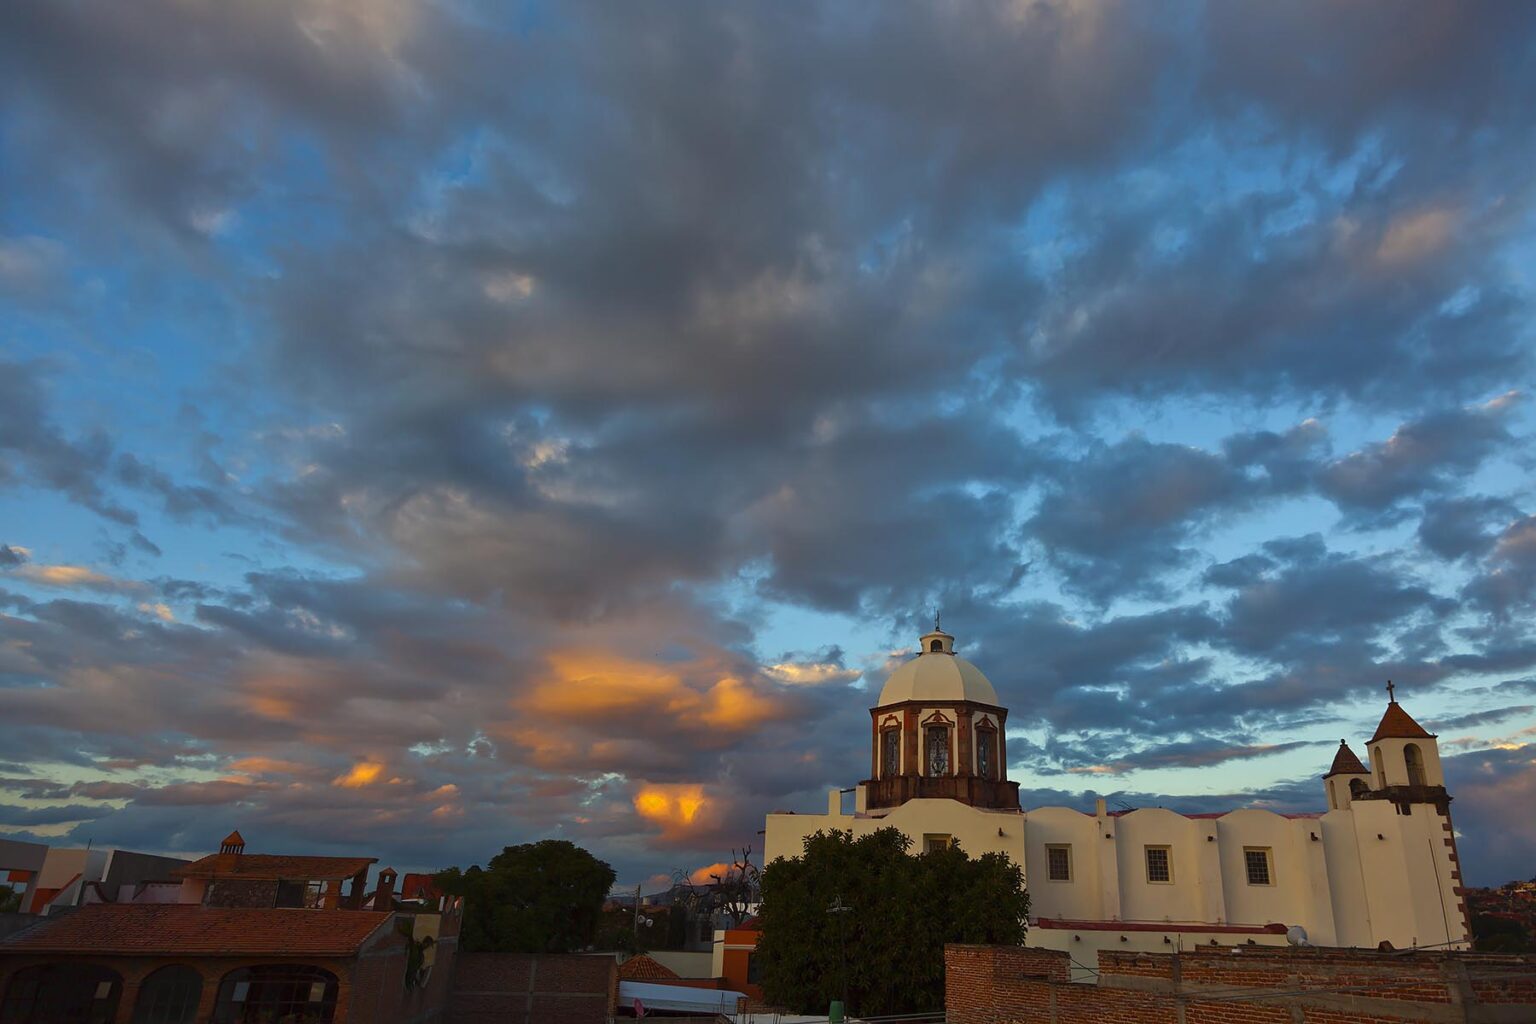 A magnificent SUNSET over the SAN ANTONIO CHURCH in SAN MIGUEL DE ALLENDE - MEXICO